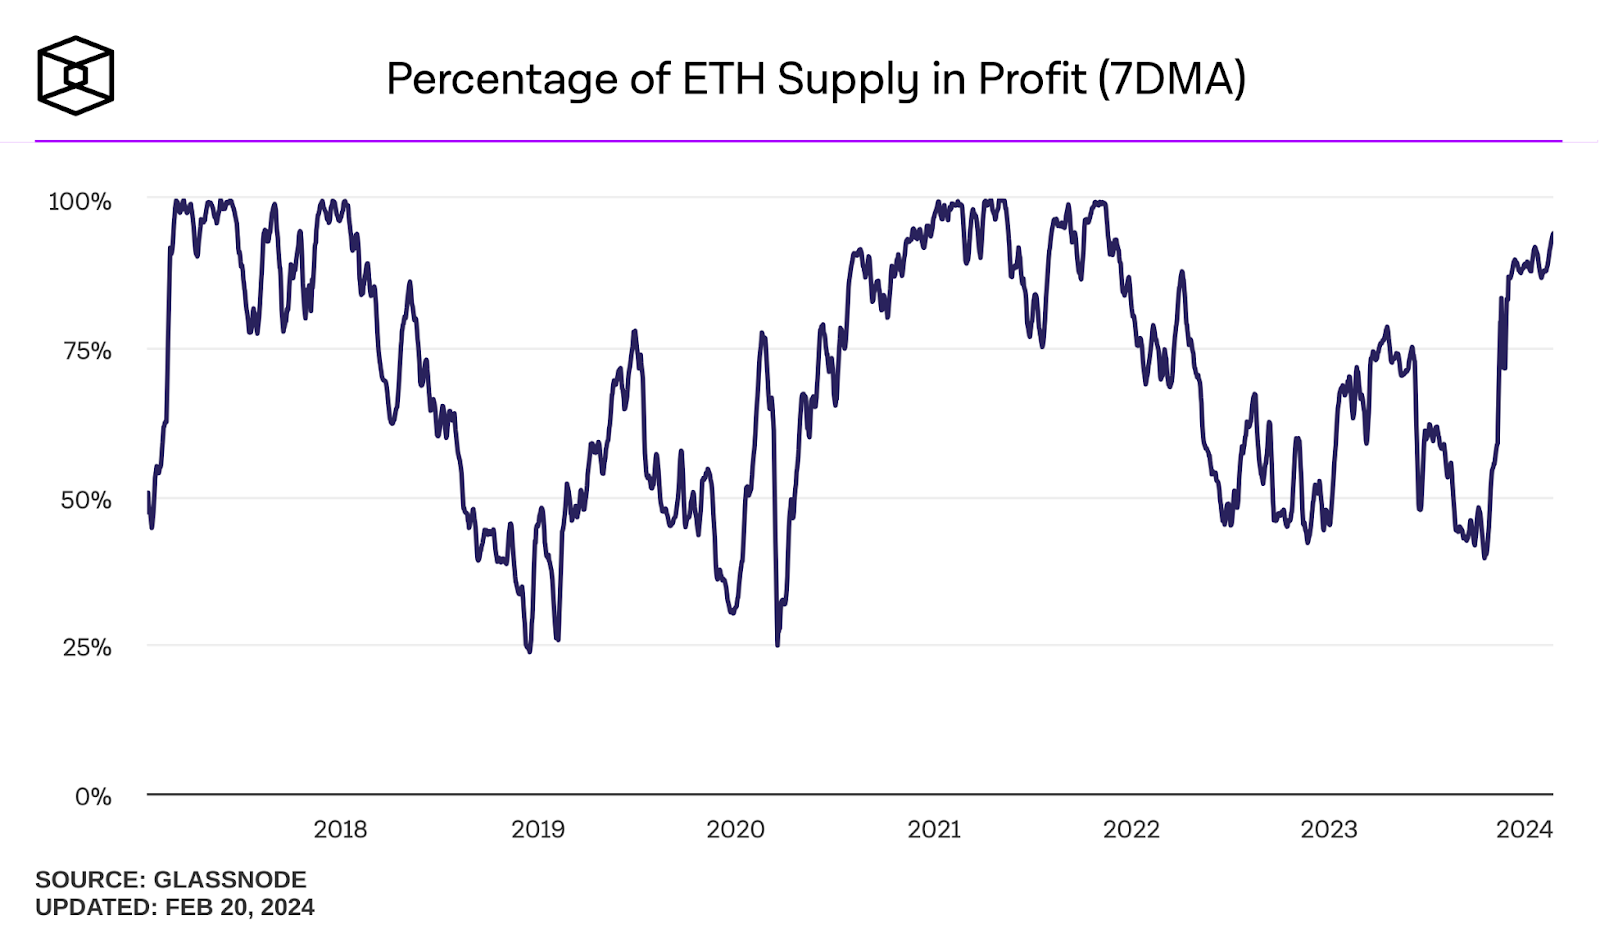 eth supply in profit